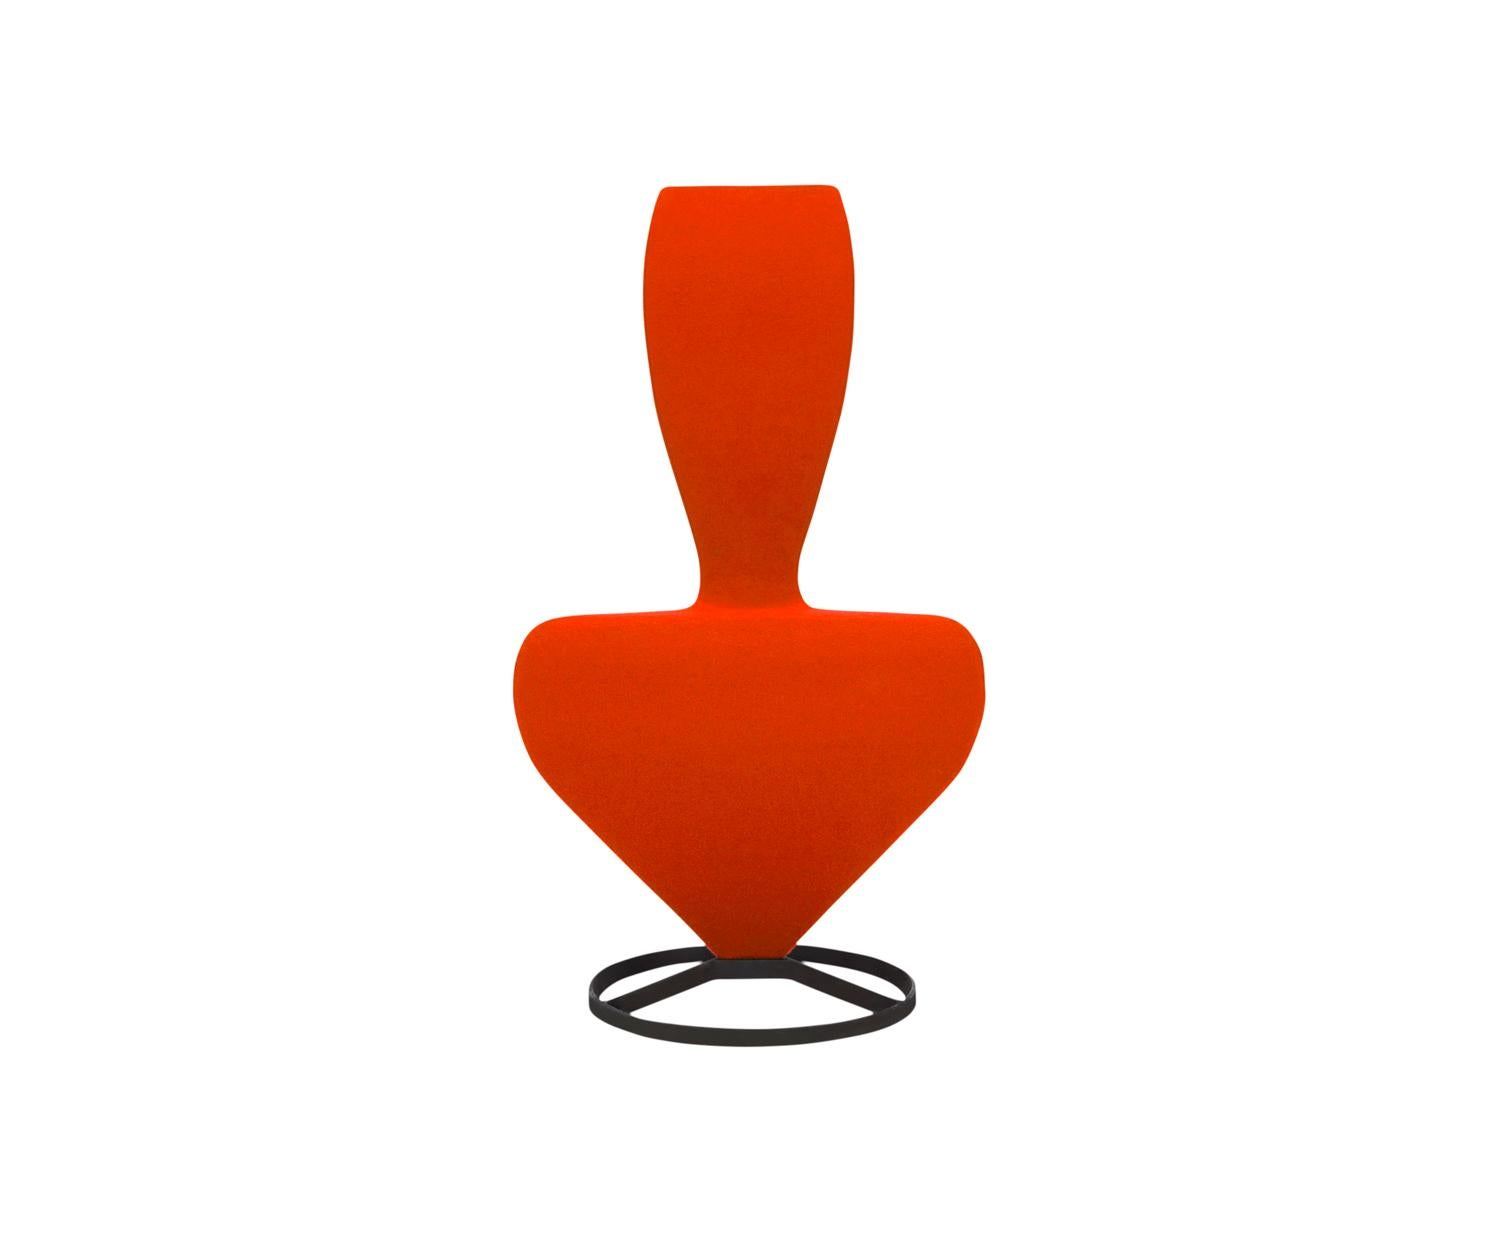 S Chair with Cast Iron Base by Tom Dixon,Orange (HERO-551.jpg) 2